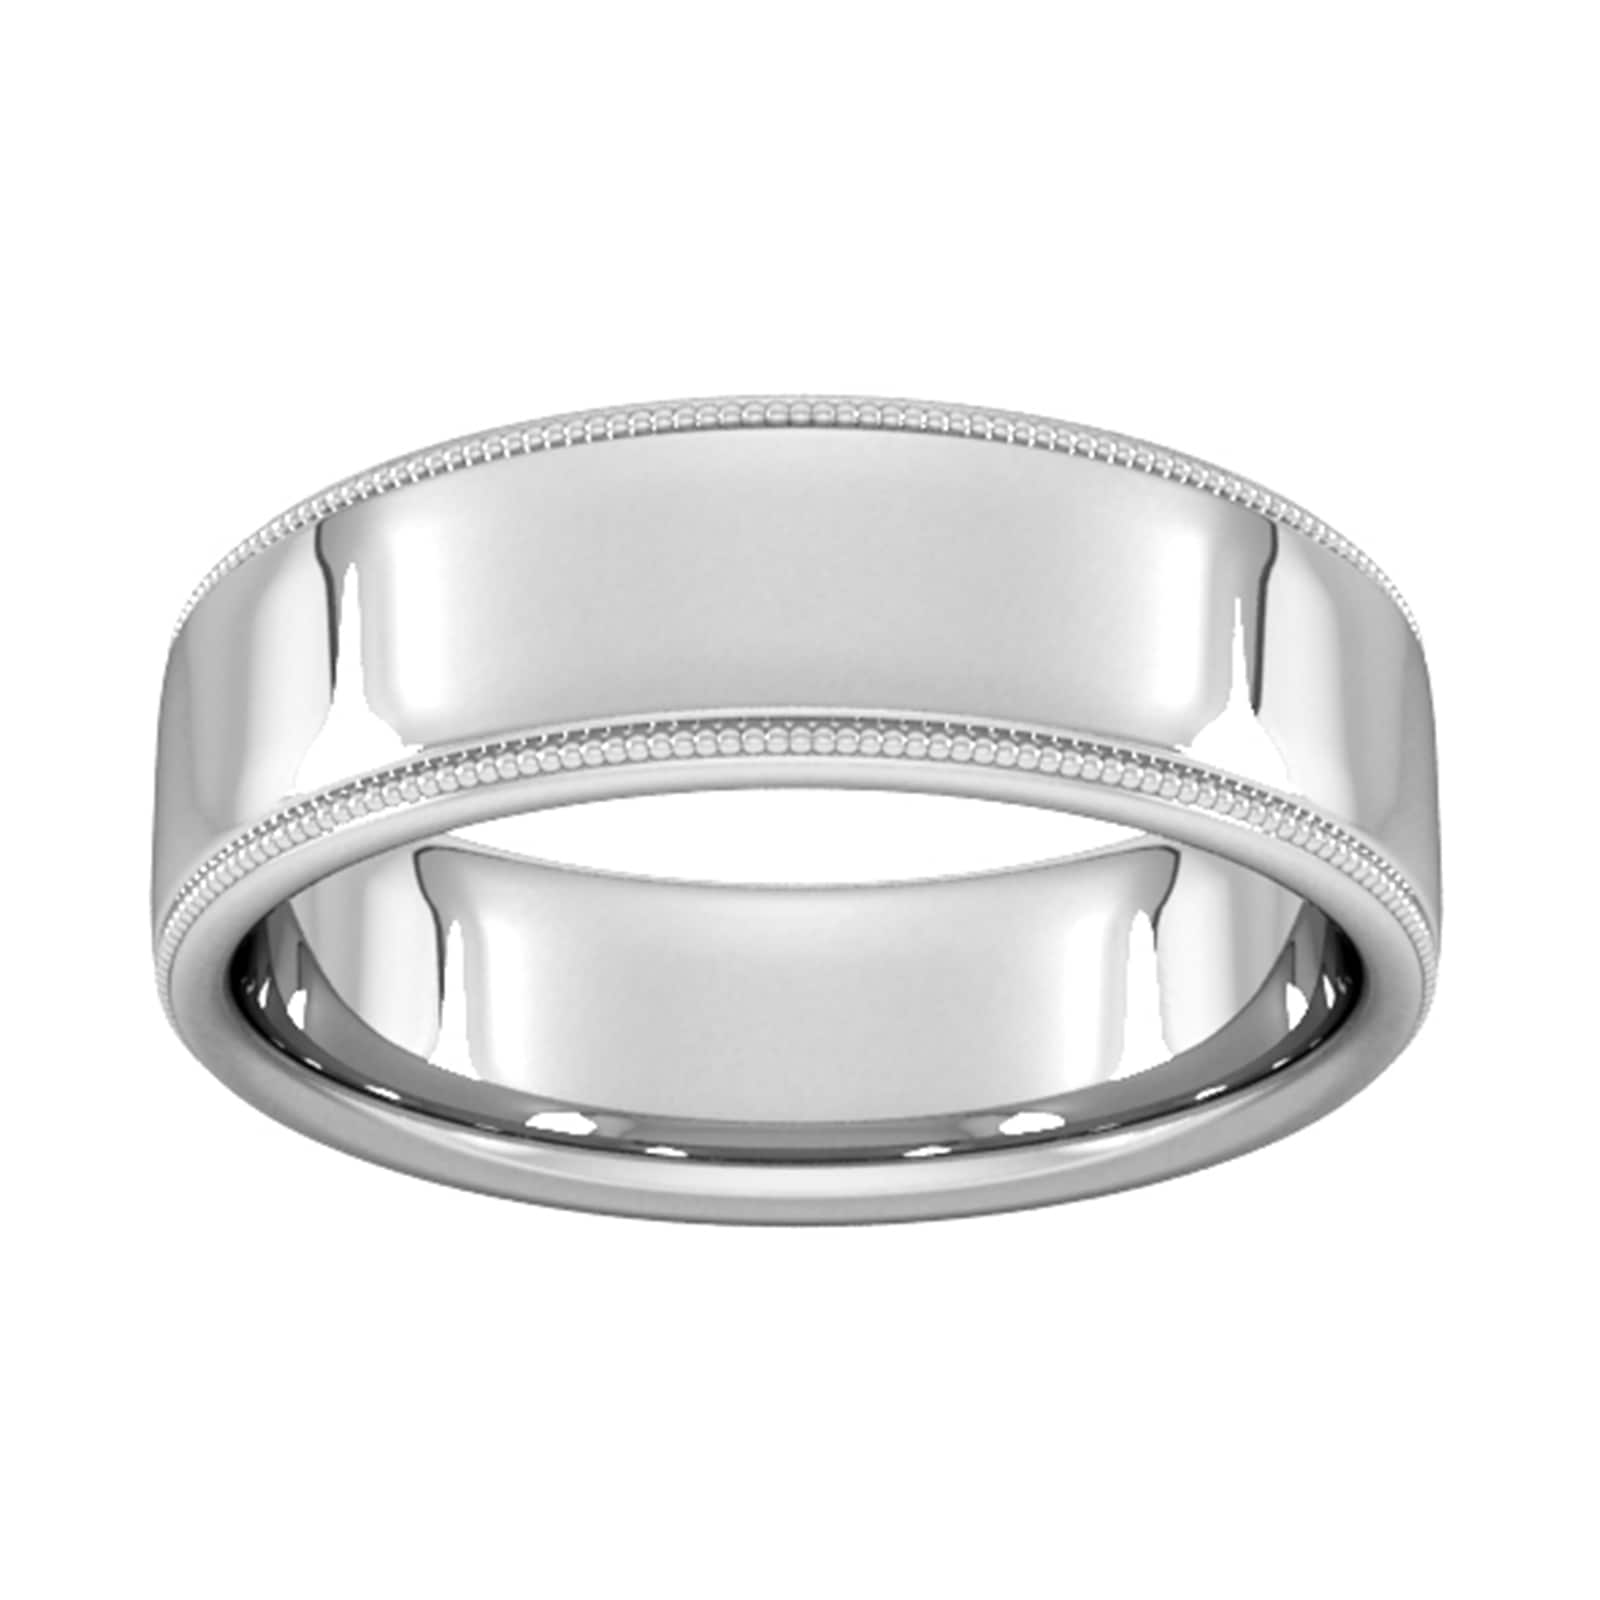 7mm Traditional Court Standard Milgrain Edge Wedding Ring In 950 Palladium - Ring Size N